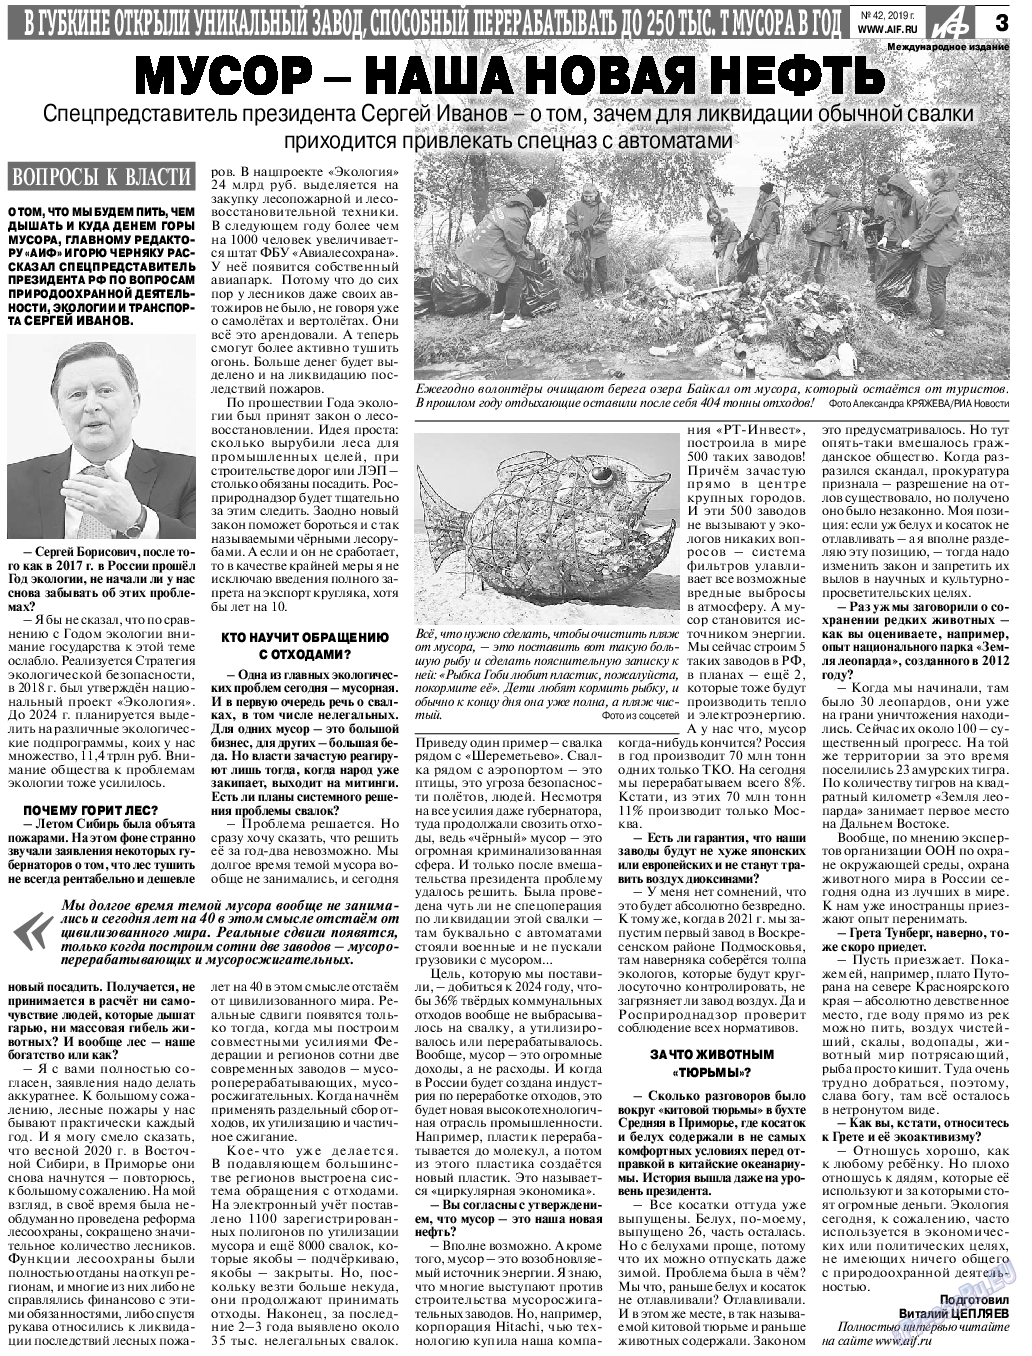 Аргументы и факты Европа, газета. 2019 №42 стр.3